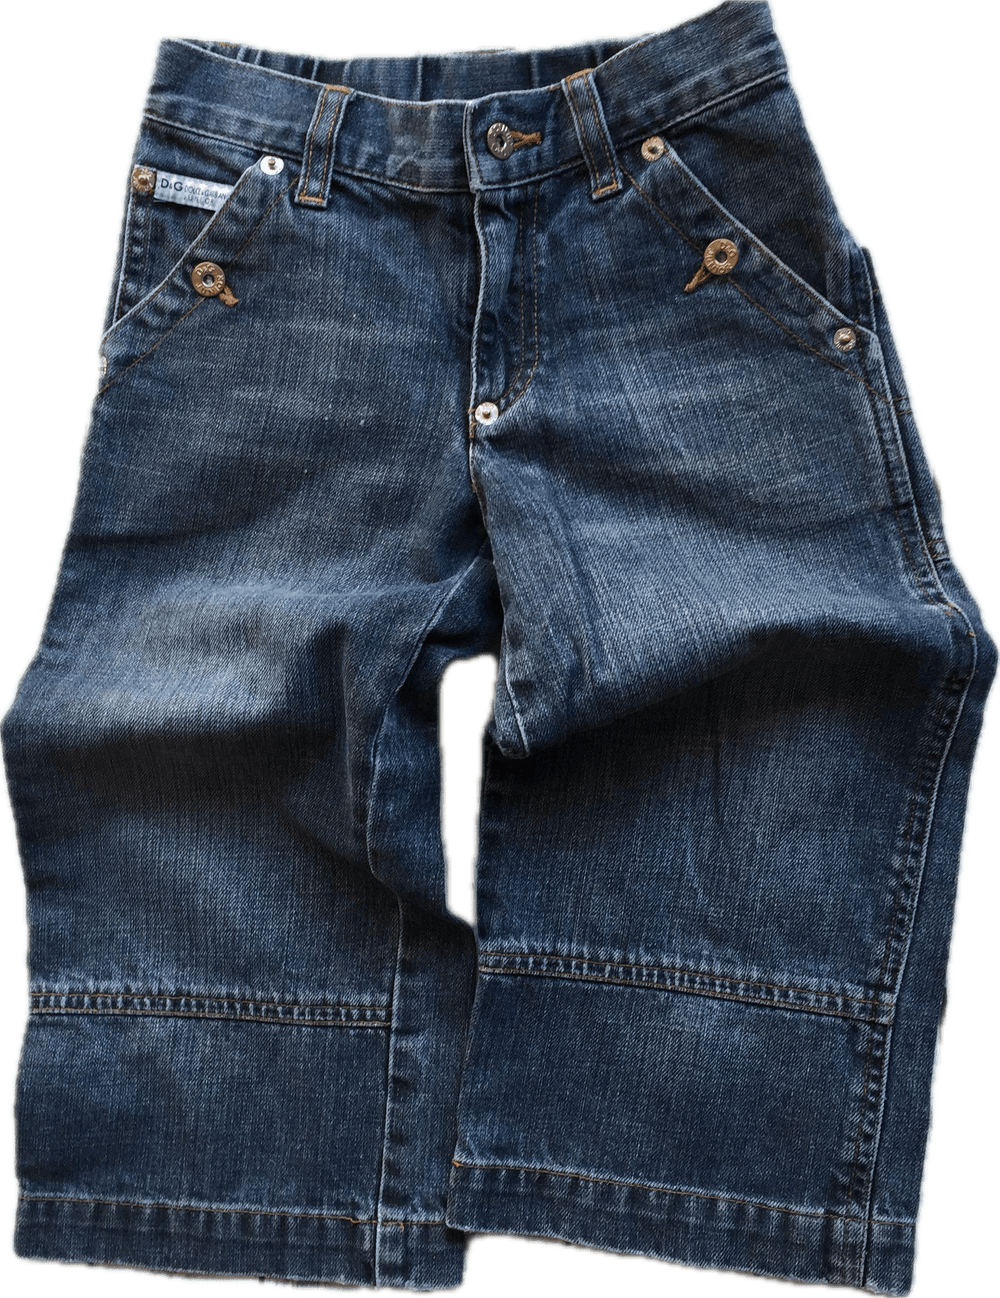 Dolce & Gabbana Wide Leg Jeans - Size 3 - Jean Pool